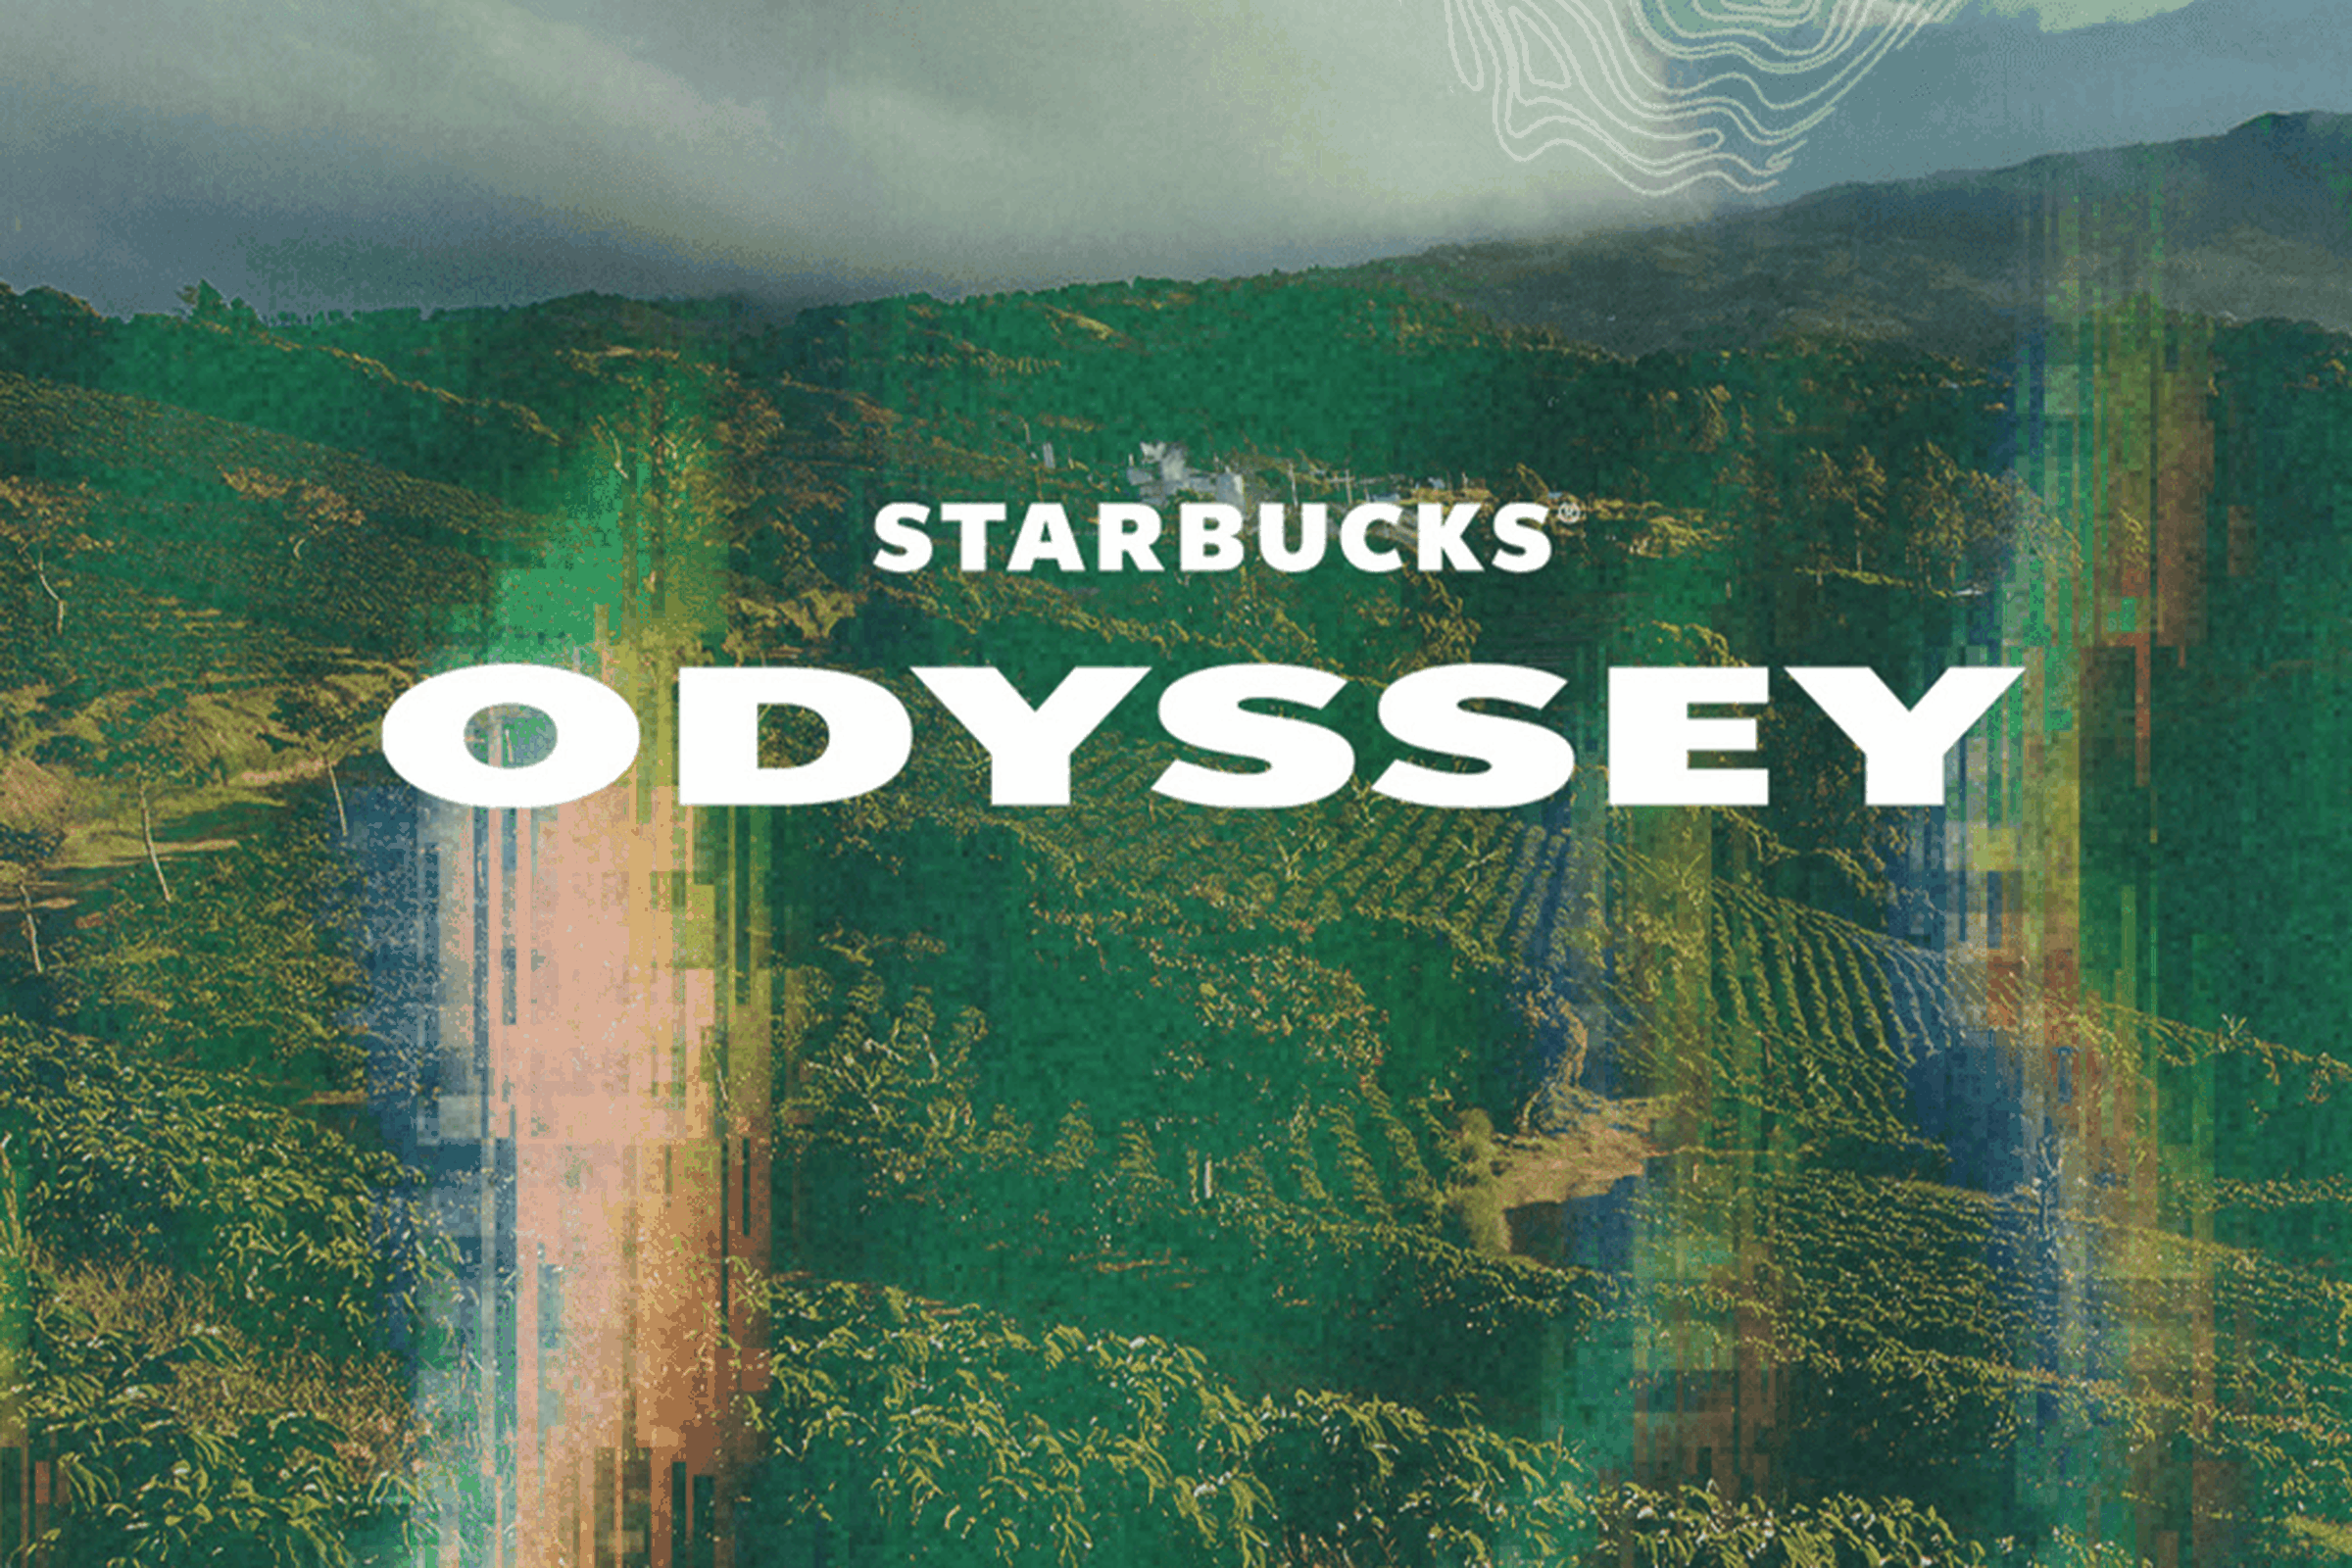 Starbucks Odyssey logo over a glitchy, multi-colored background